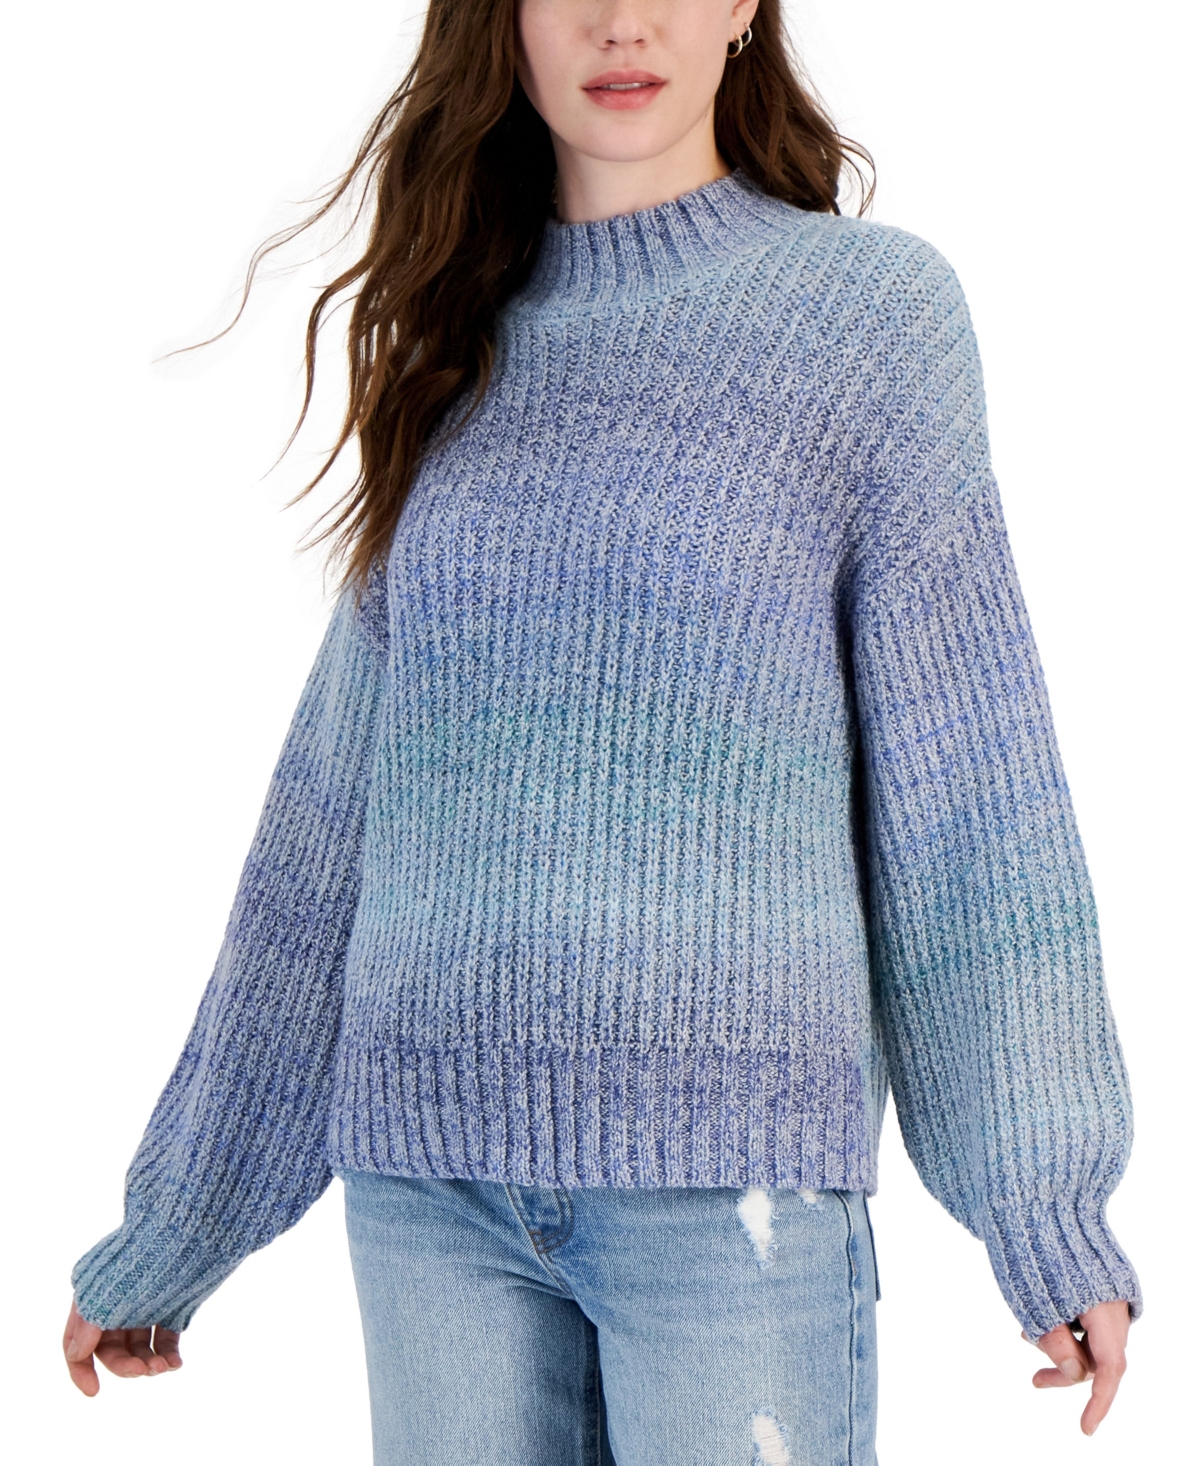 Juniors' Ombre Mock-Neck Sweater - Aqua Sky Space Dye Combo